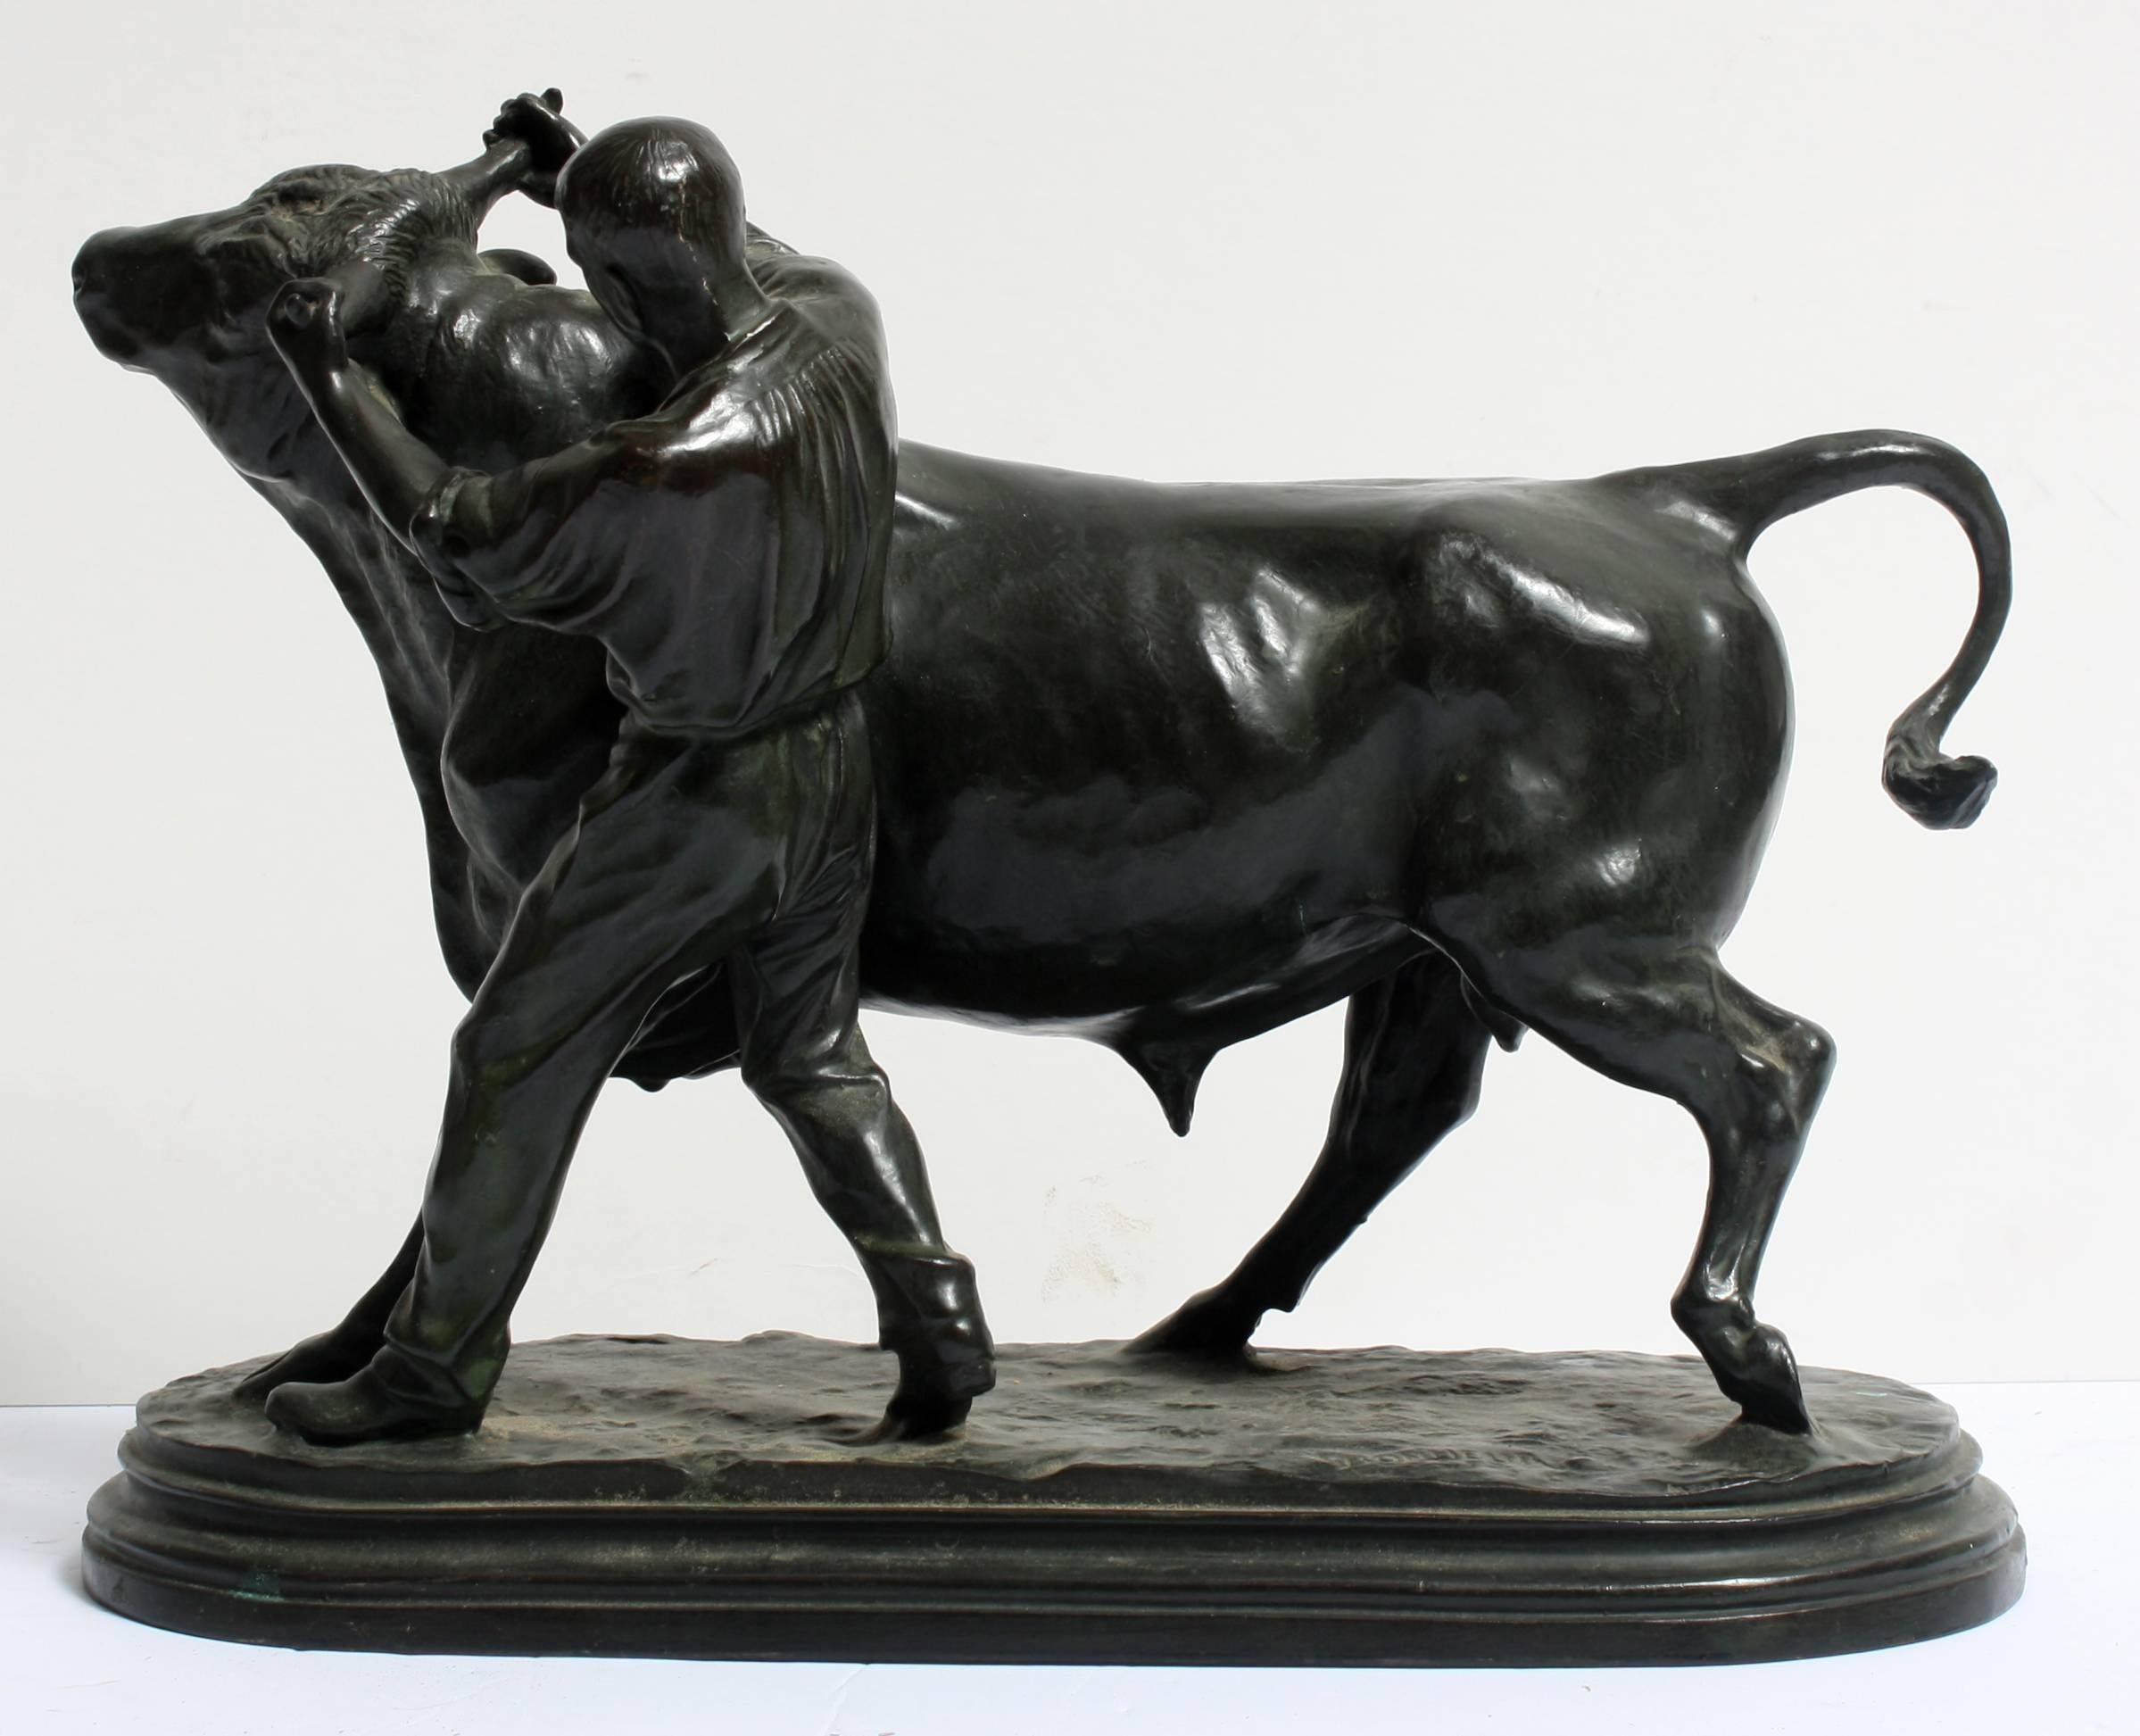 Man Taming a Bull - Sculpture by Isidore Jules Bonheur